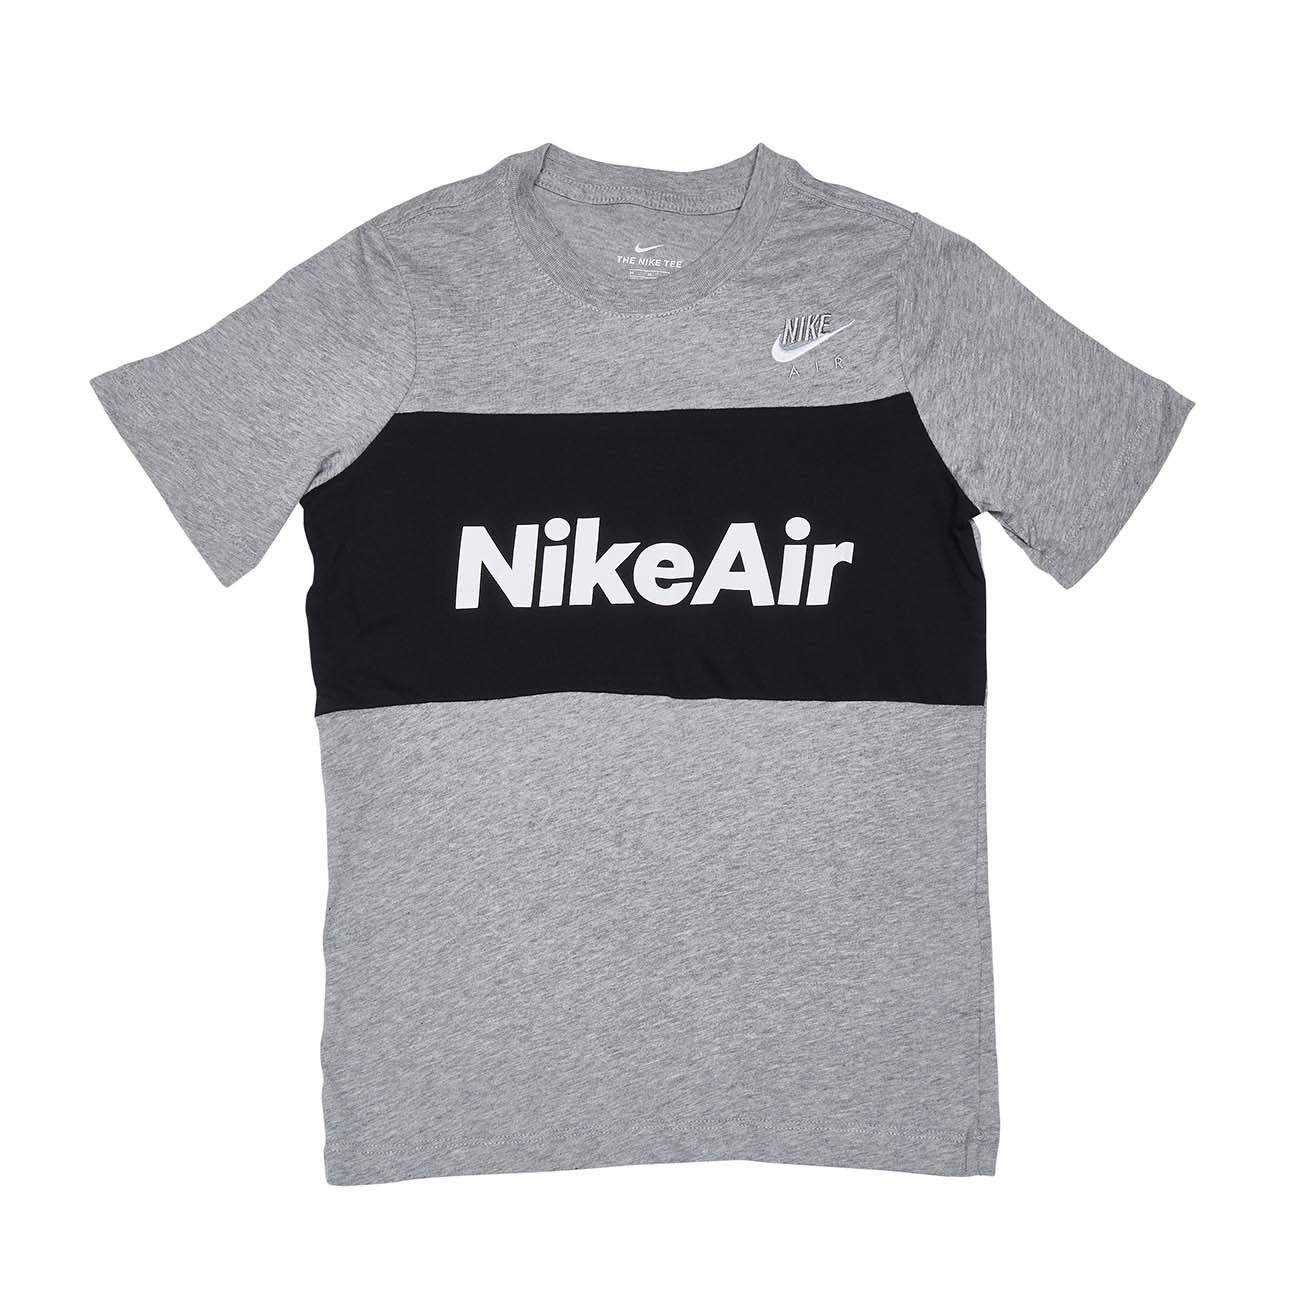 nike air grey t shirt